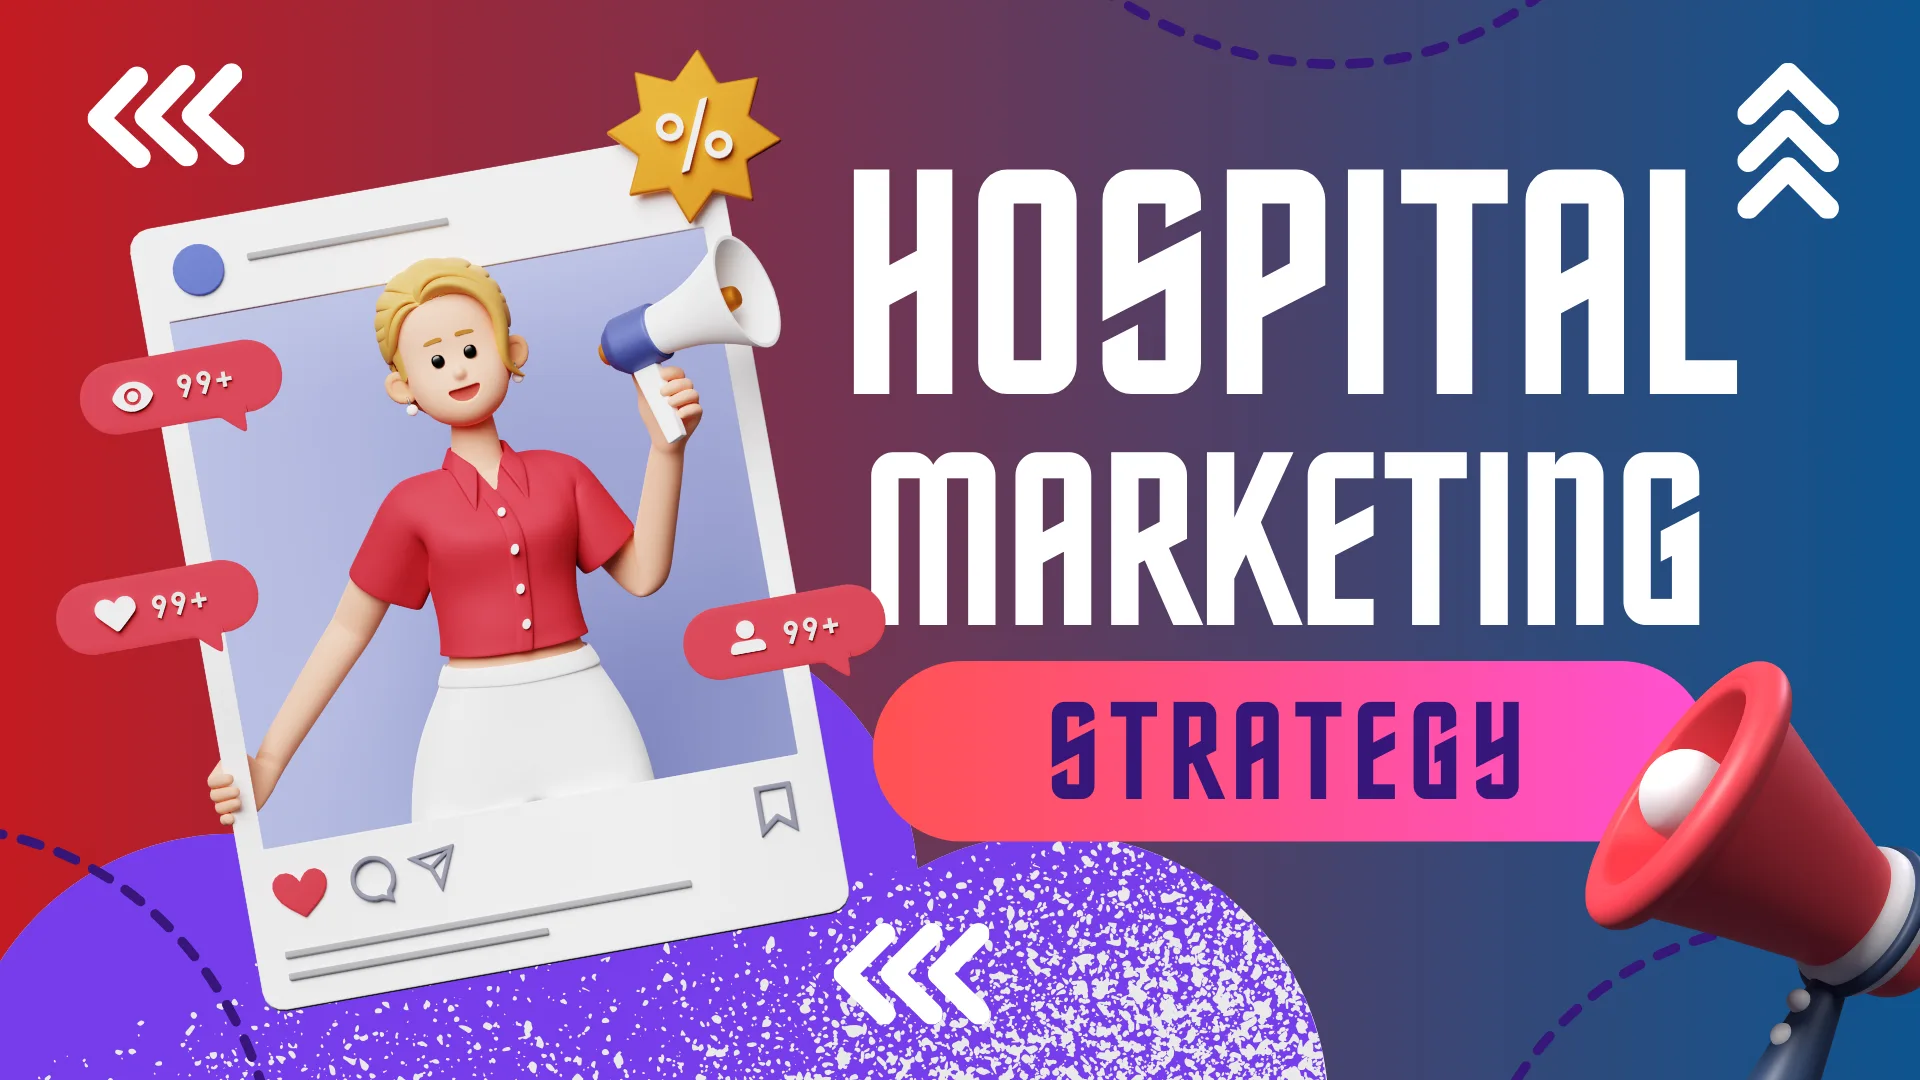 Hospital marketing strategy